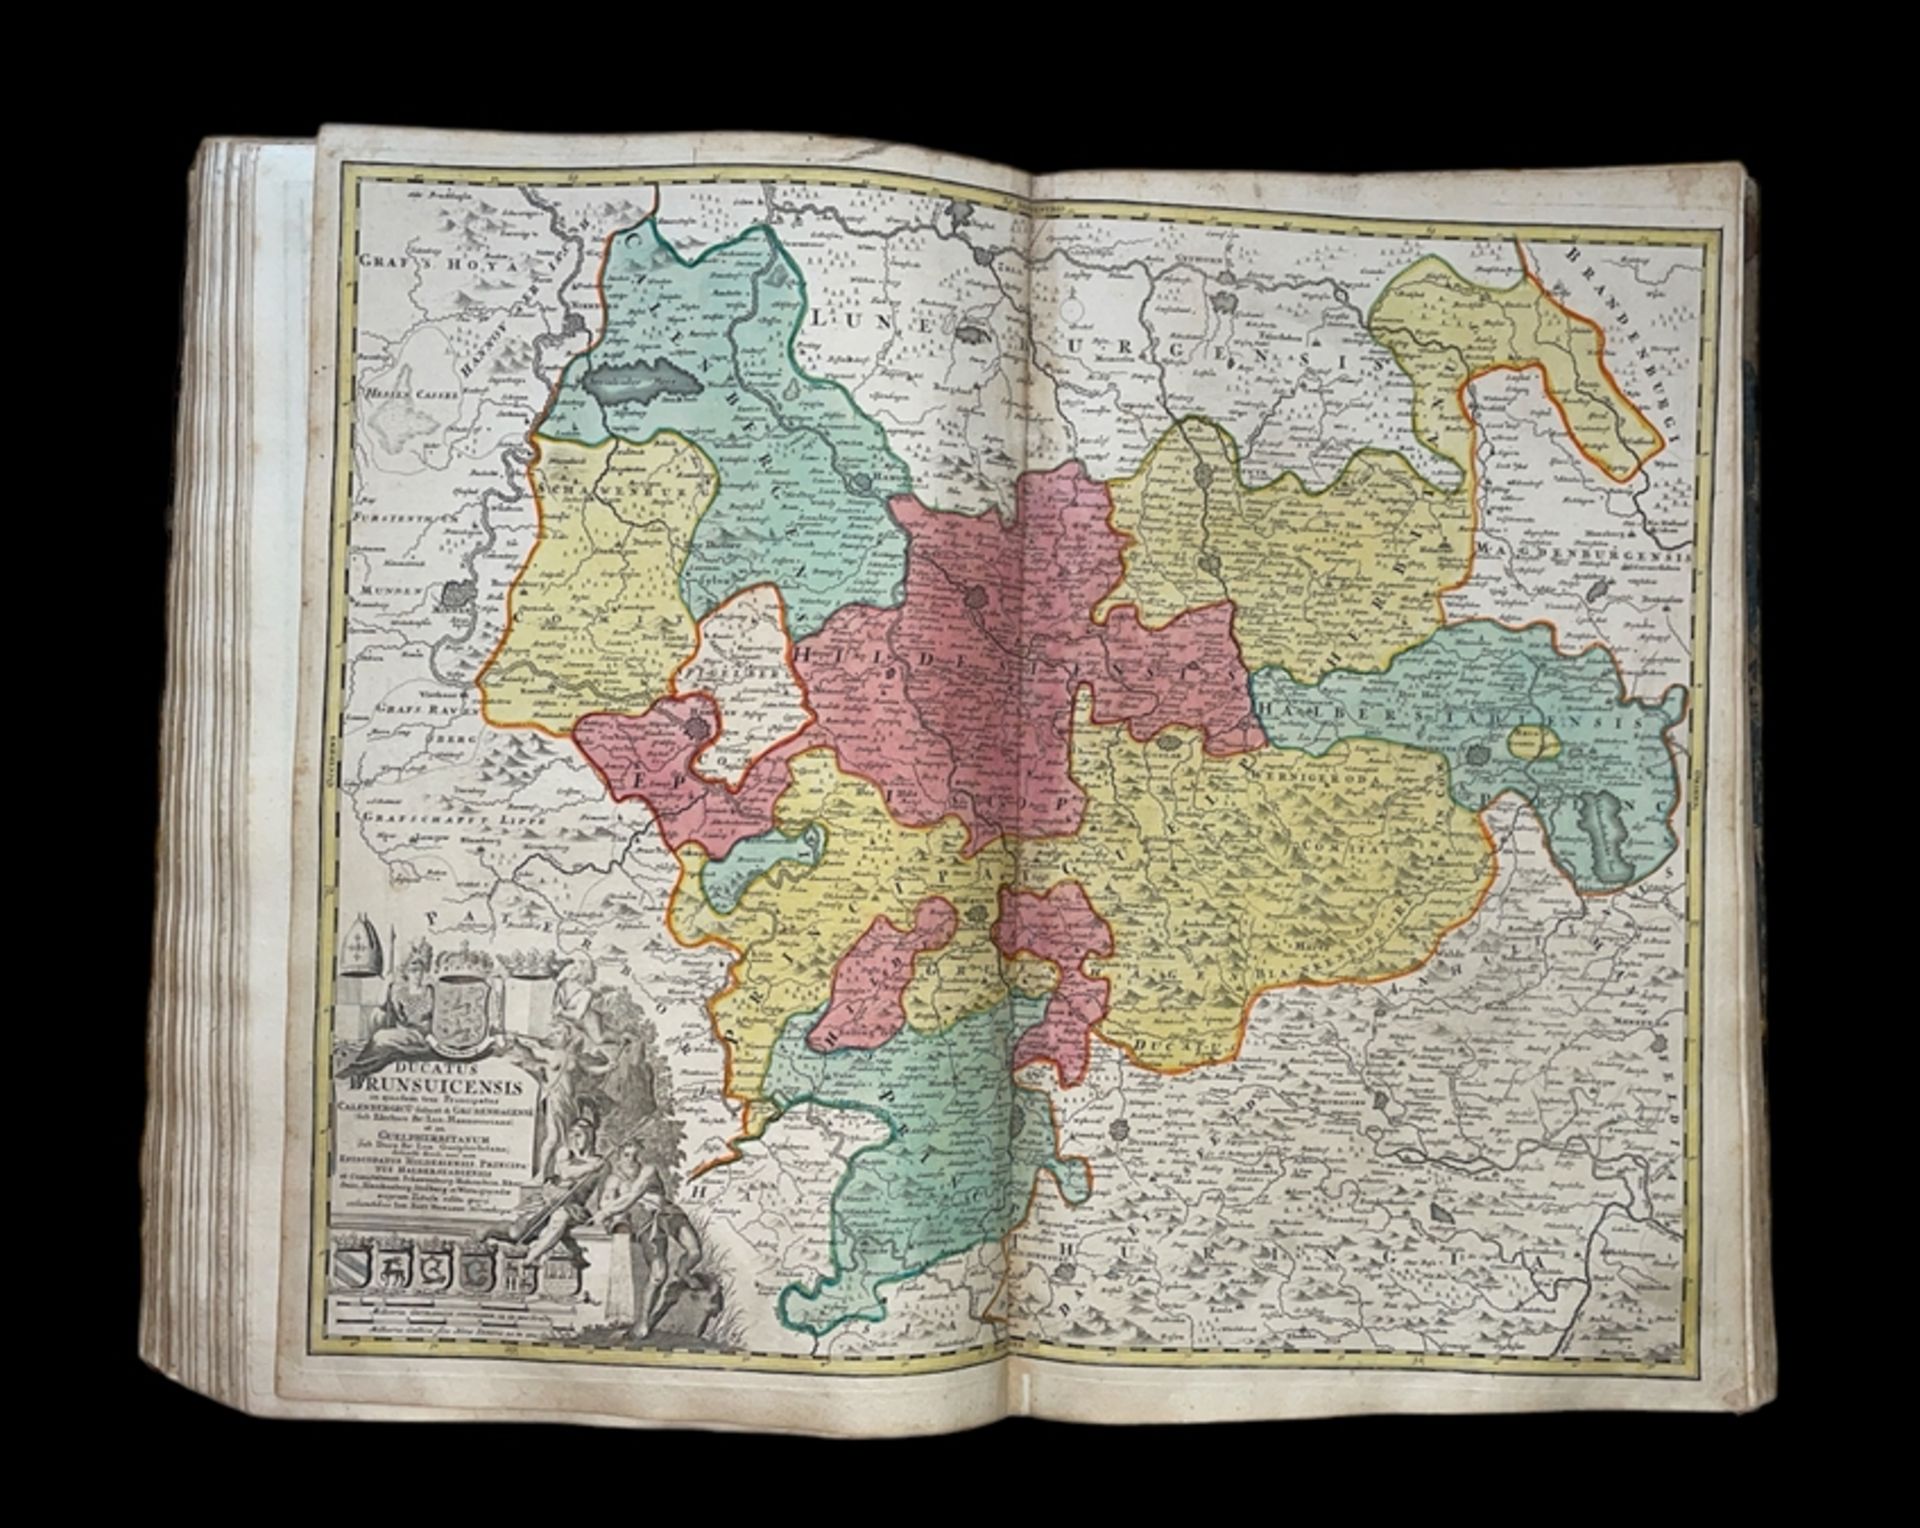 J.B. HOMANN "Neuer Atlas über die gantze Welt" (Nürnberg, 1712) - Image 57 of 125